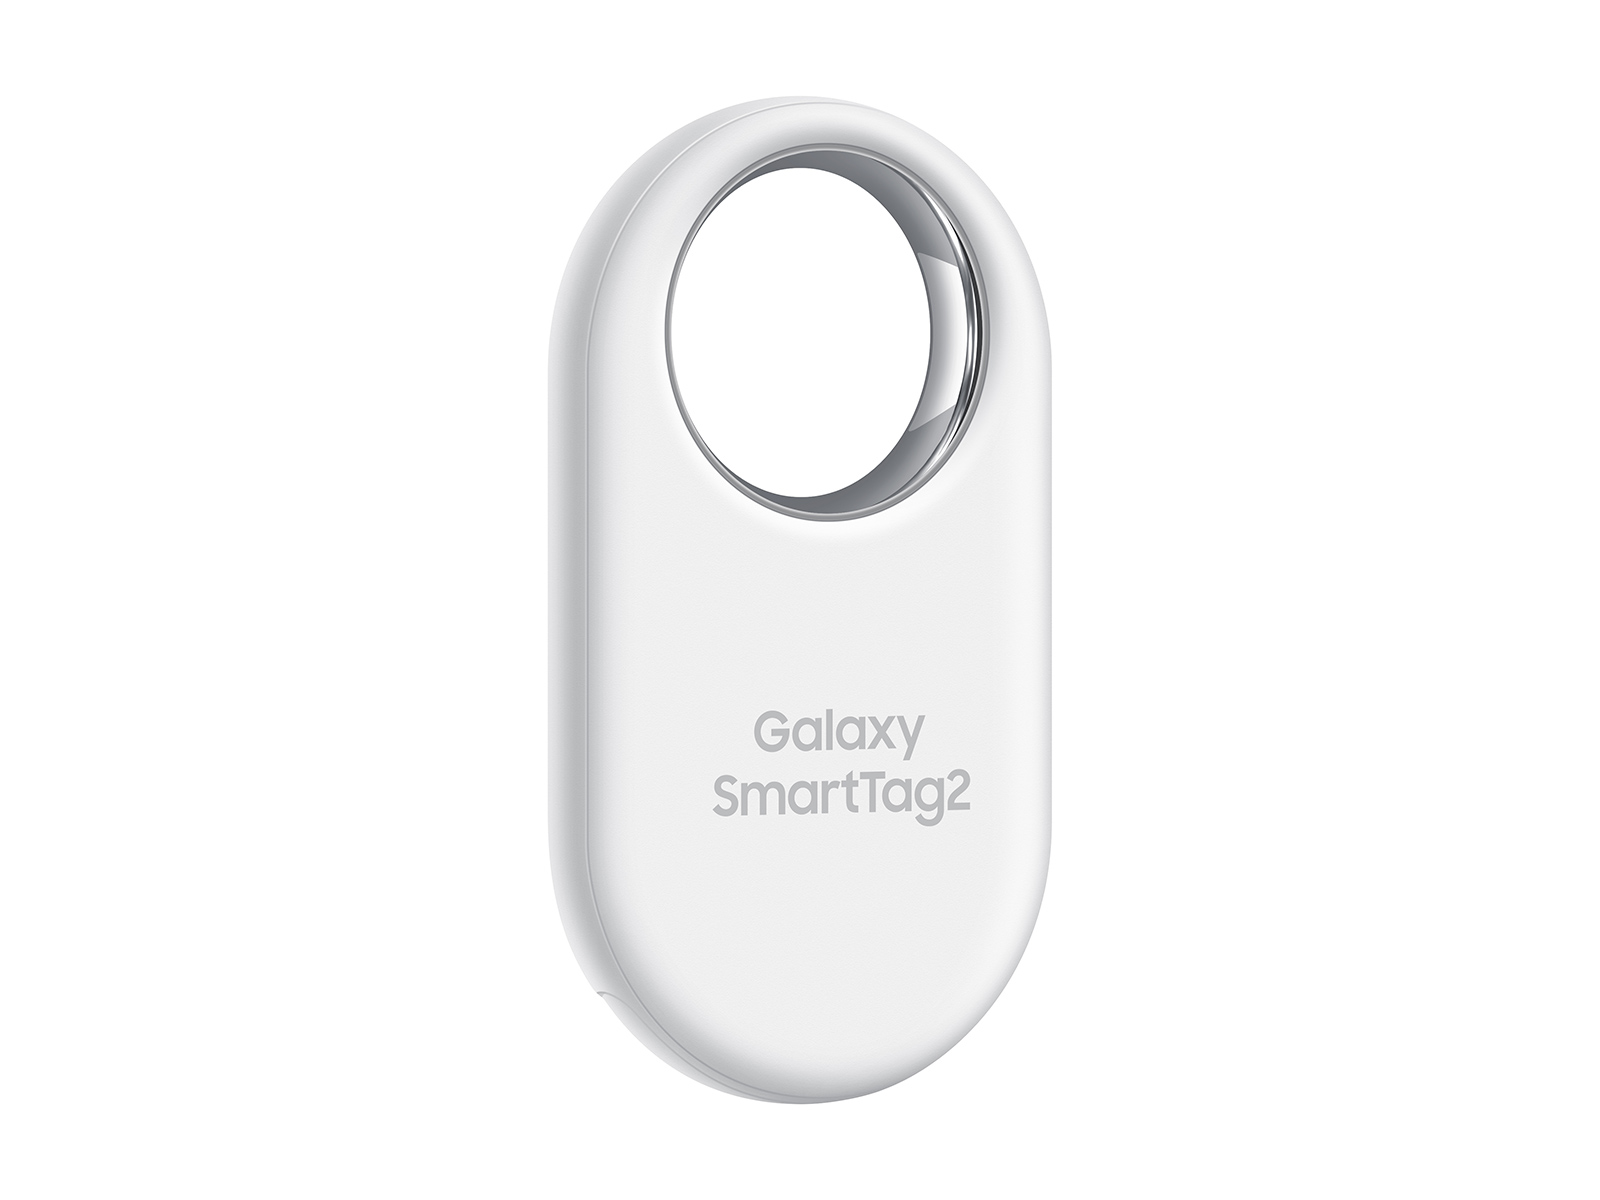 Samsung Galaxy Smart Tag 4 Pack